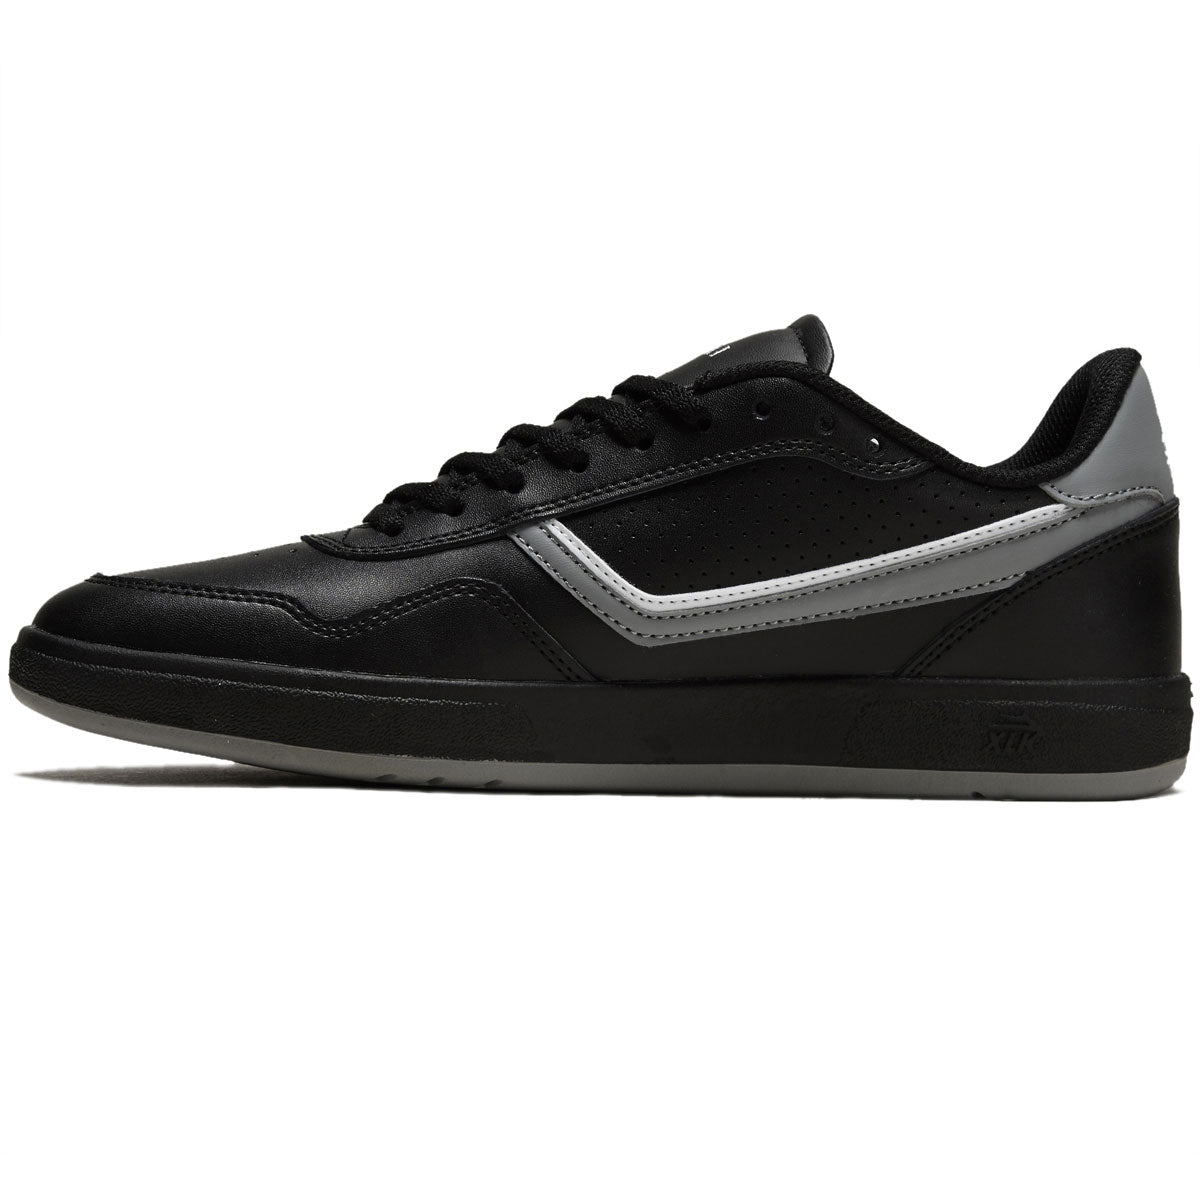 Lakai Terrace Shoes - Black/Black Leather image 2